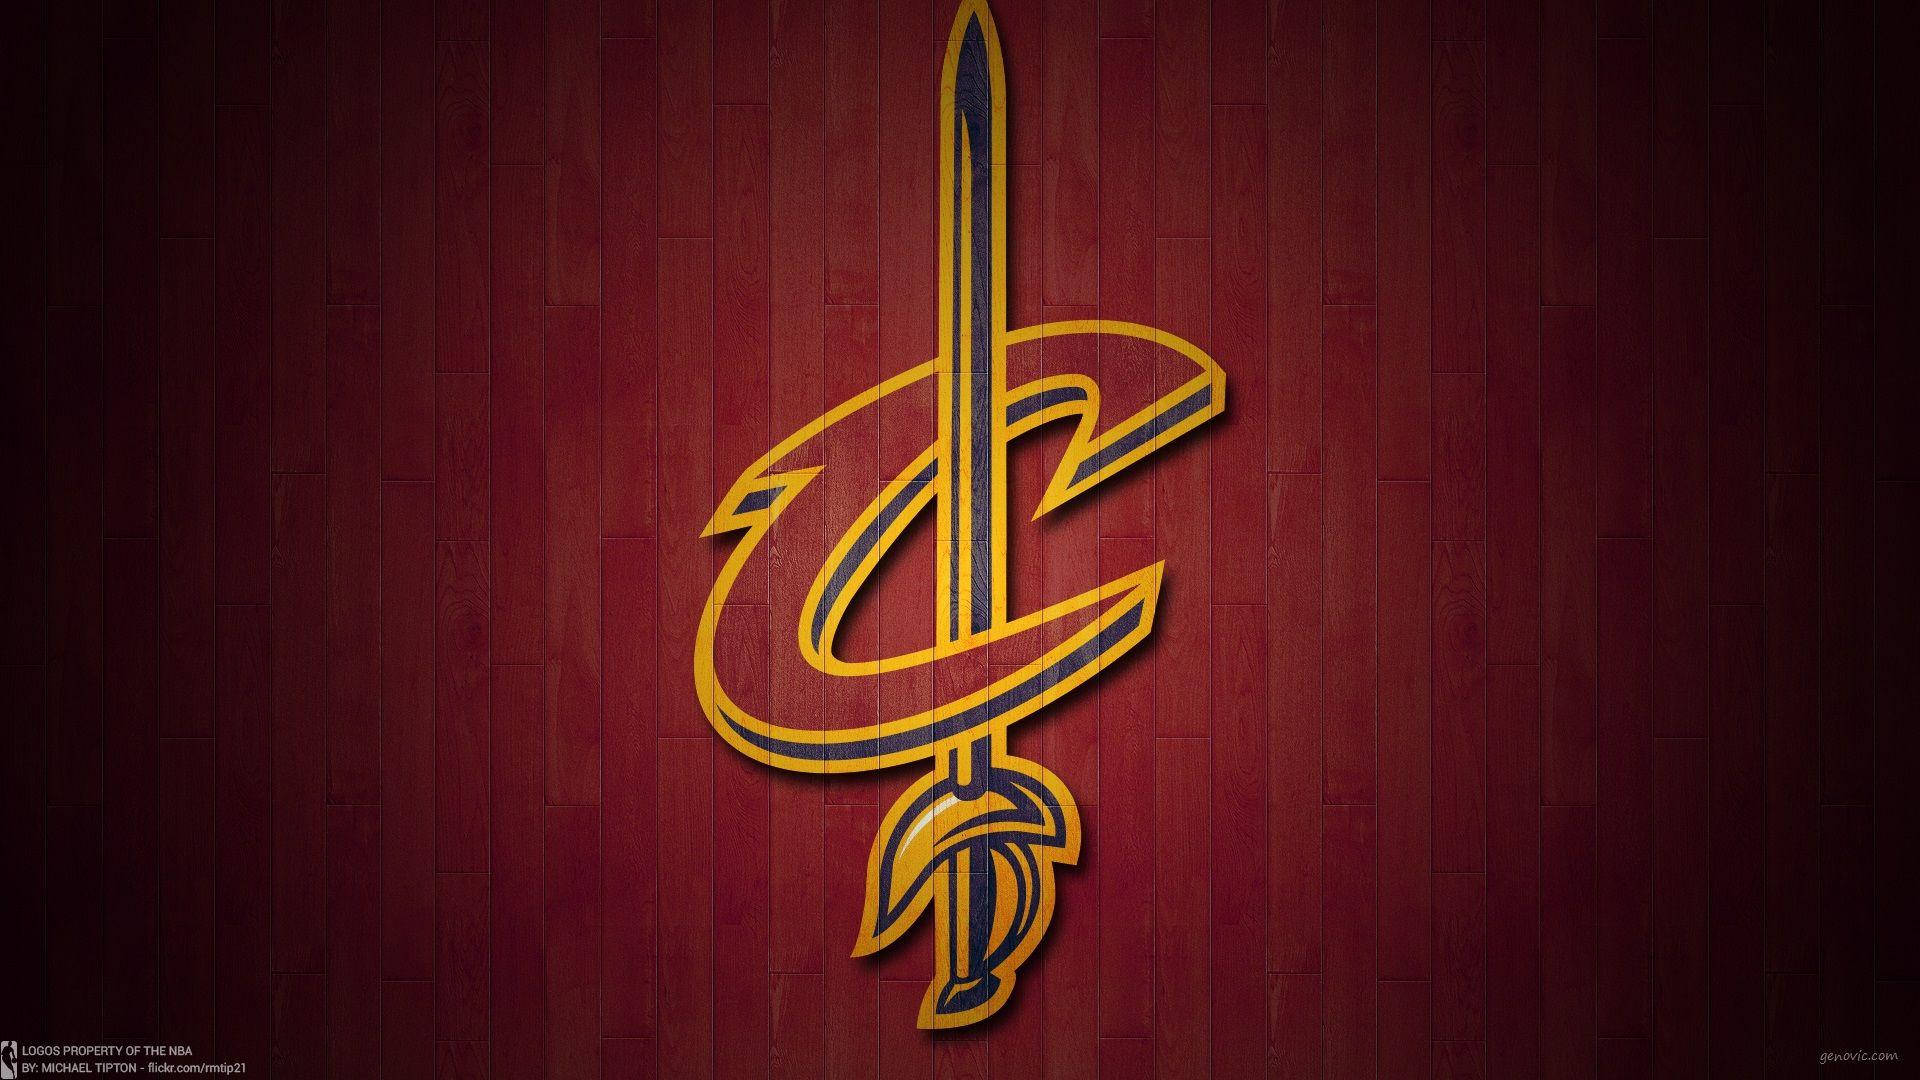 Cleveland Cavaliers Gold Sword Logo Wallpaper